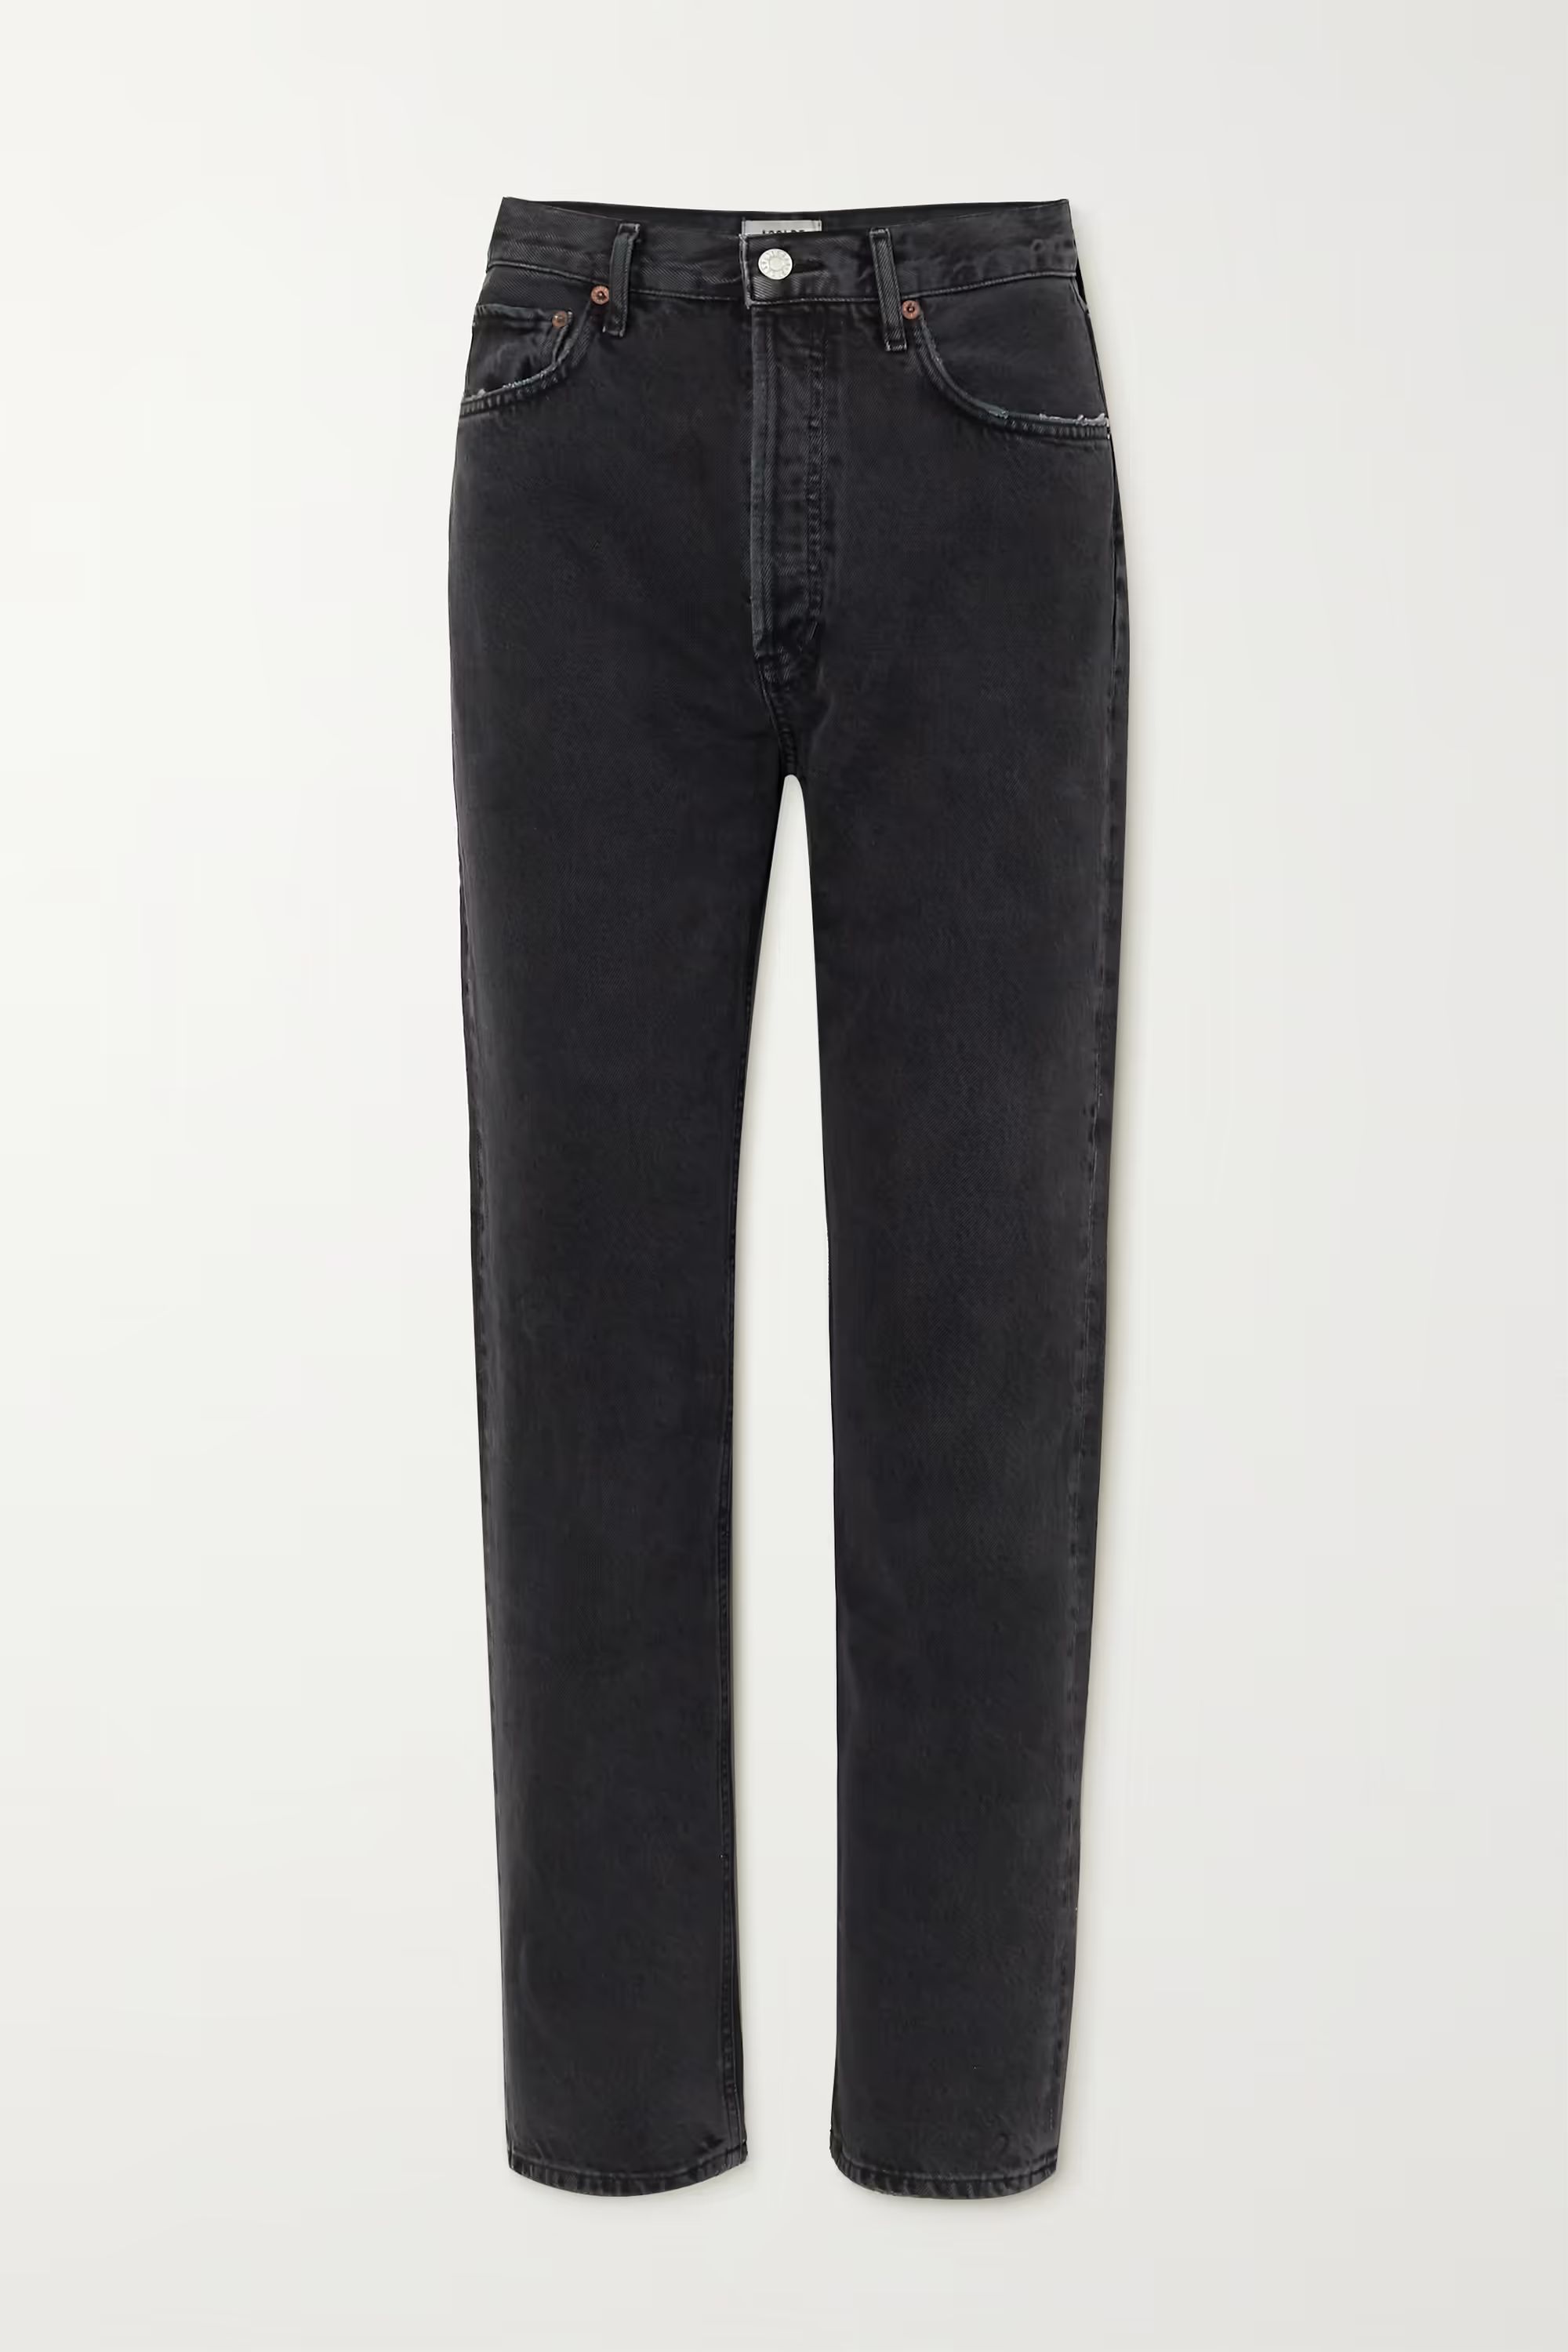 + NET SUSTAIN '90s high-rise straight-leg organic jeans | NET-A-PORTER (UK & EU)